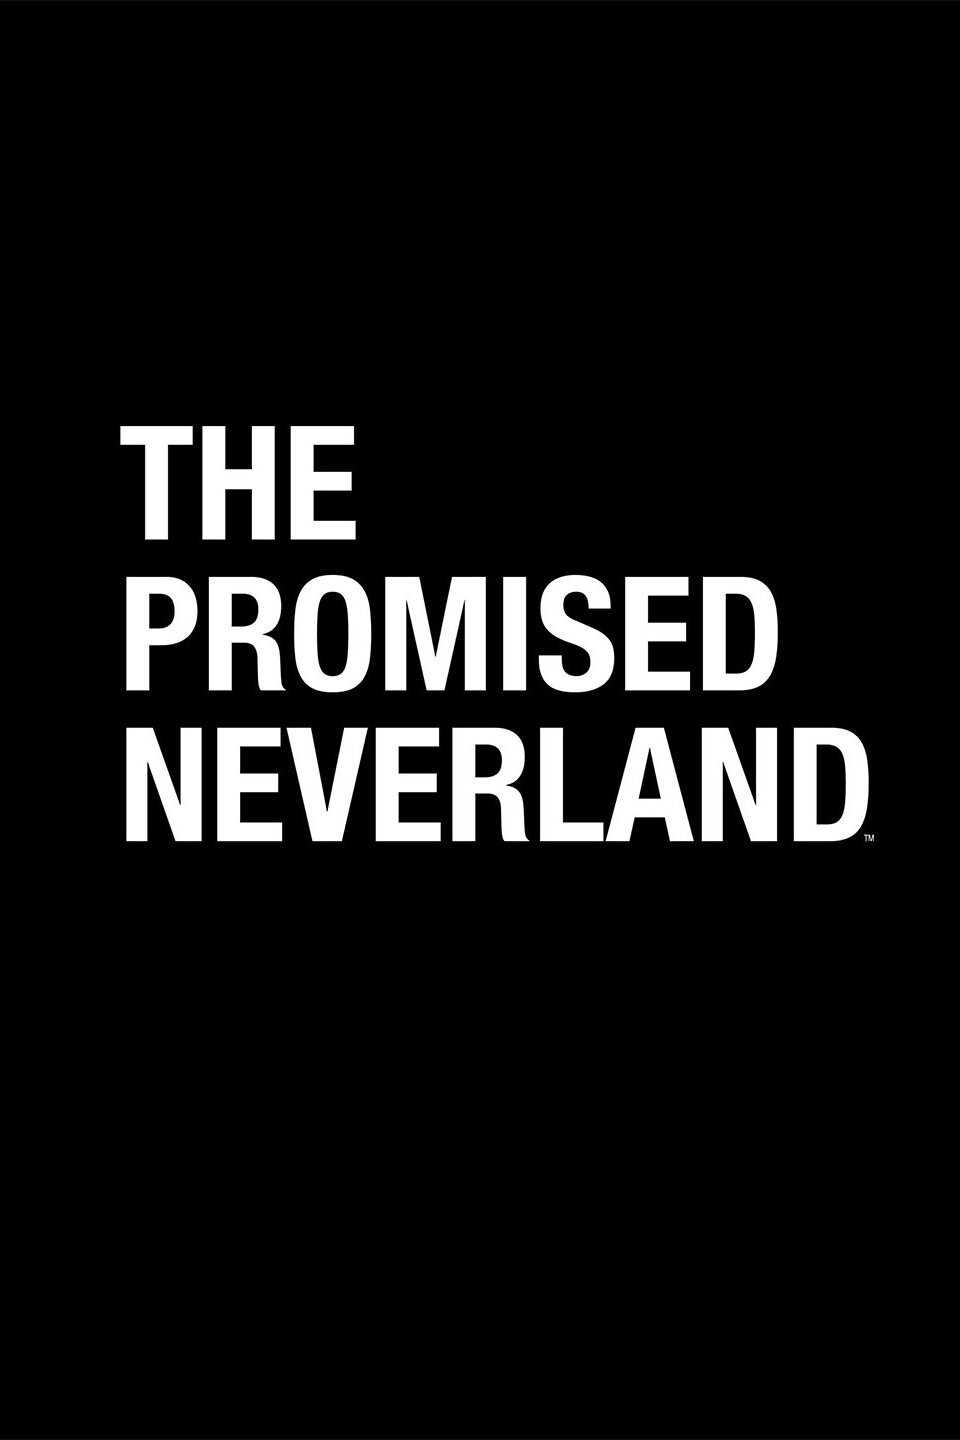 The Promised Neverland: Temporada 1 – TV no Google Play